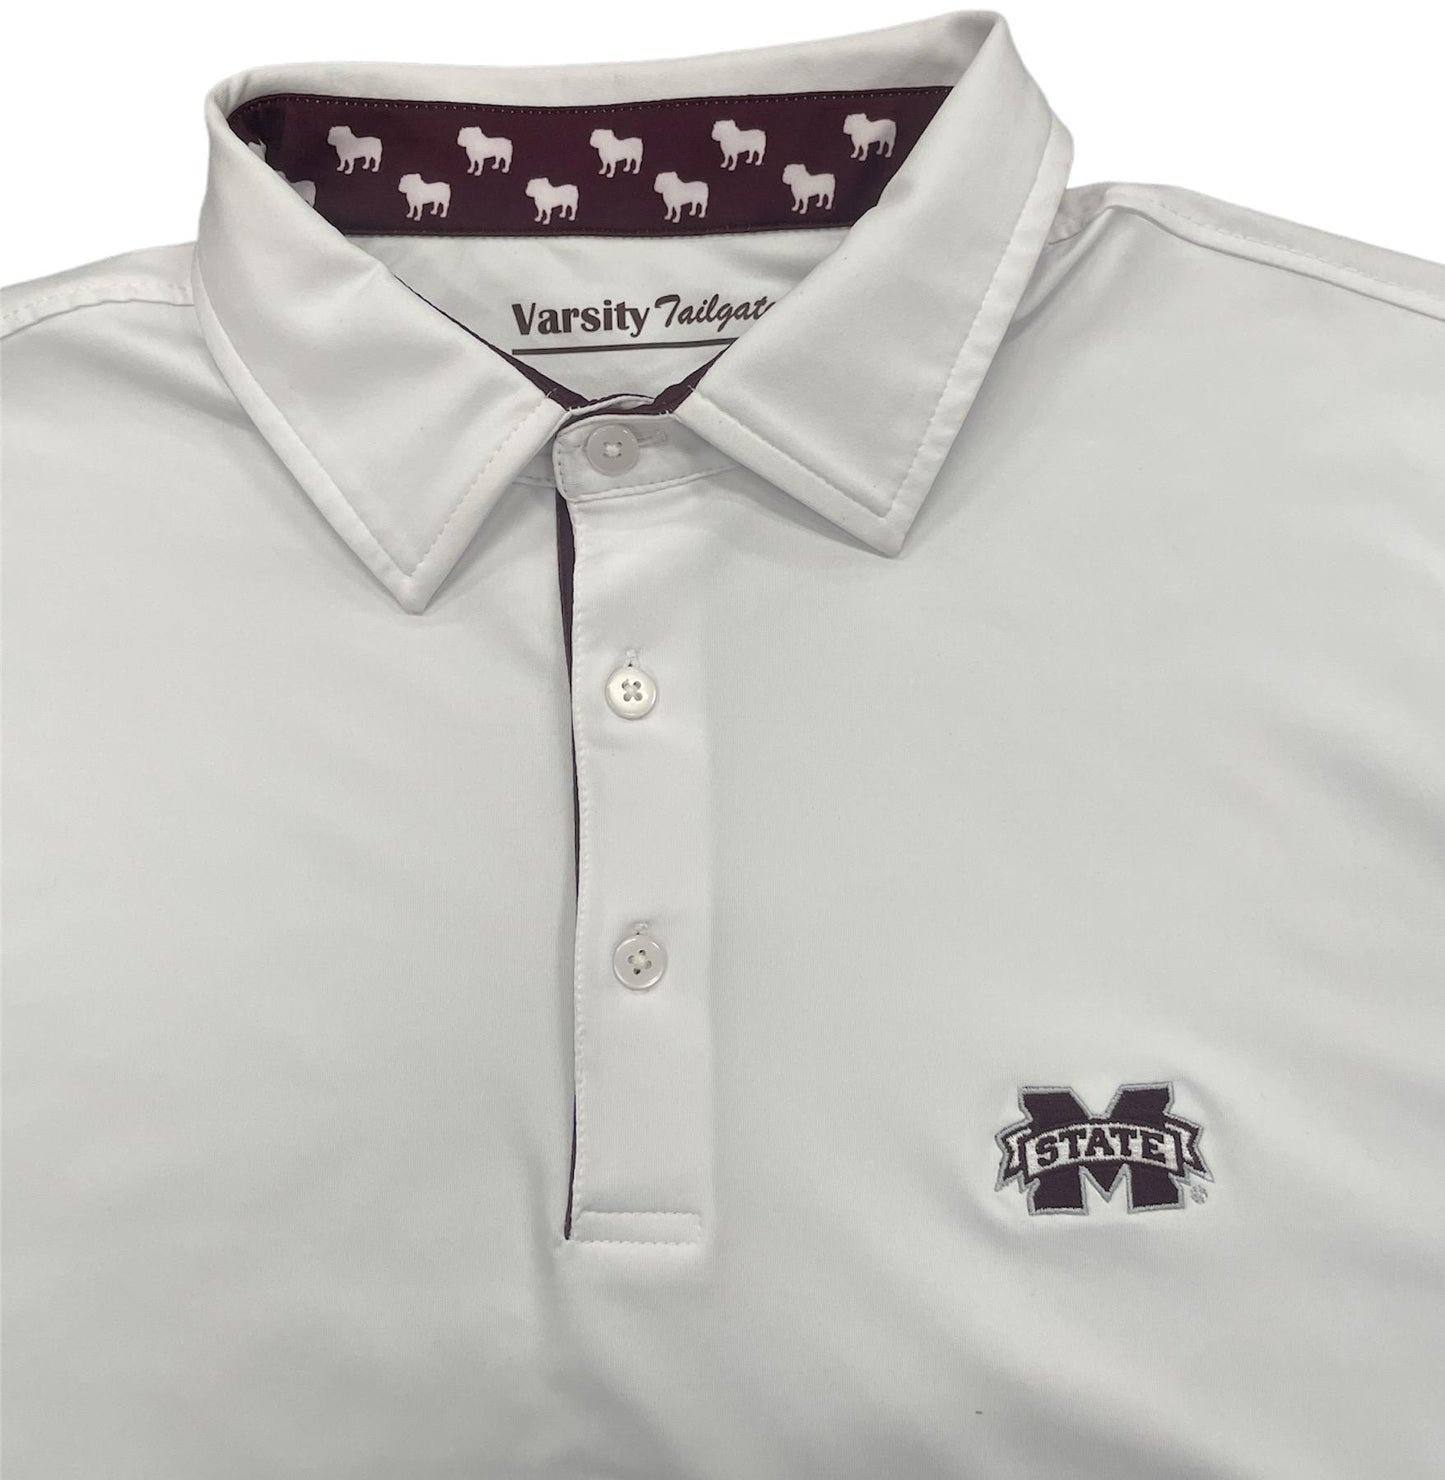 Antigua Men's University of Louisville Tribute Polo Shirt